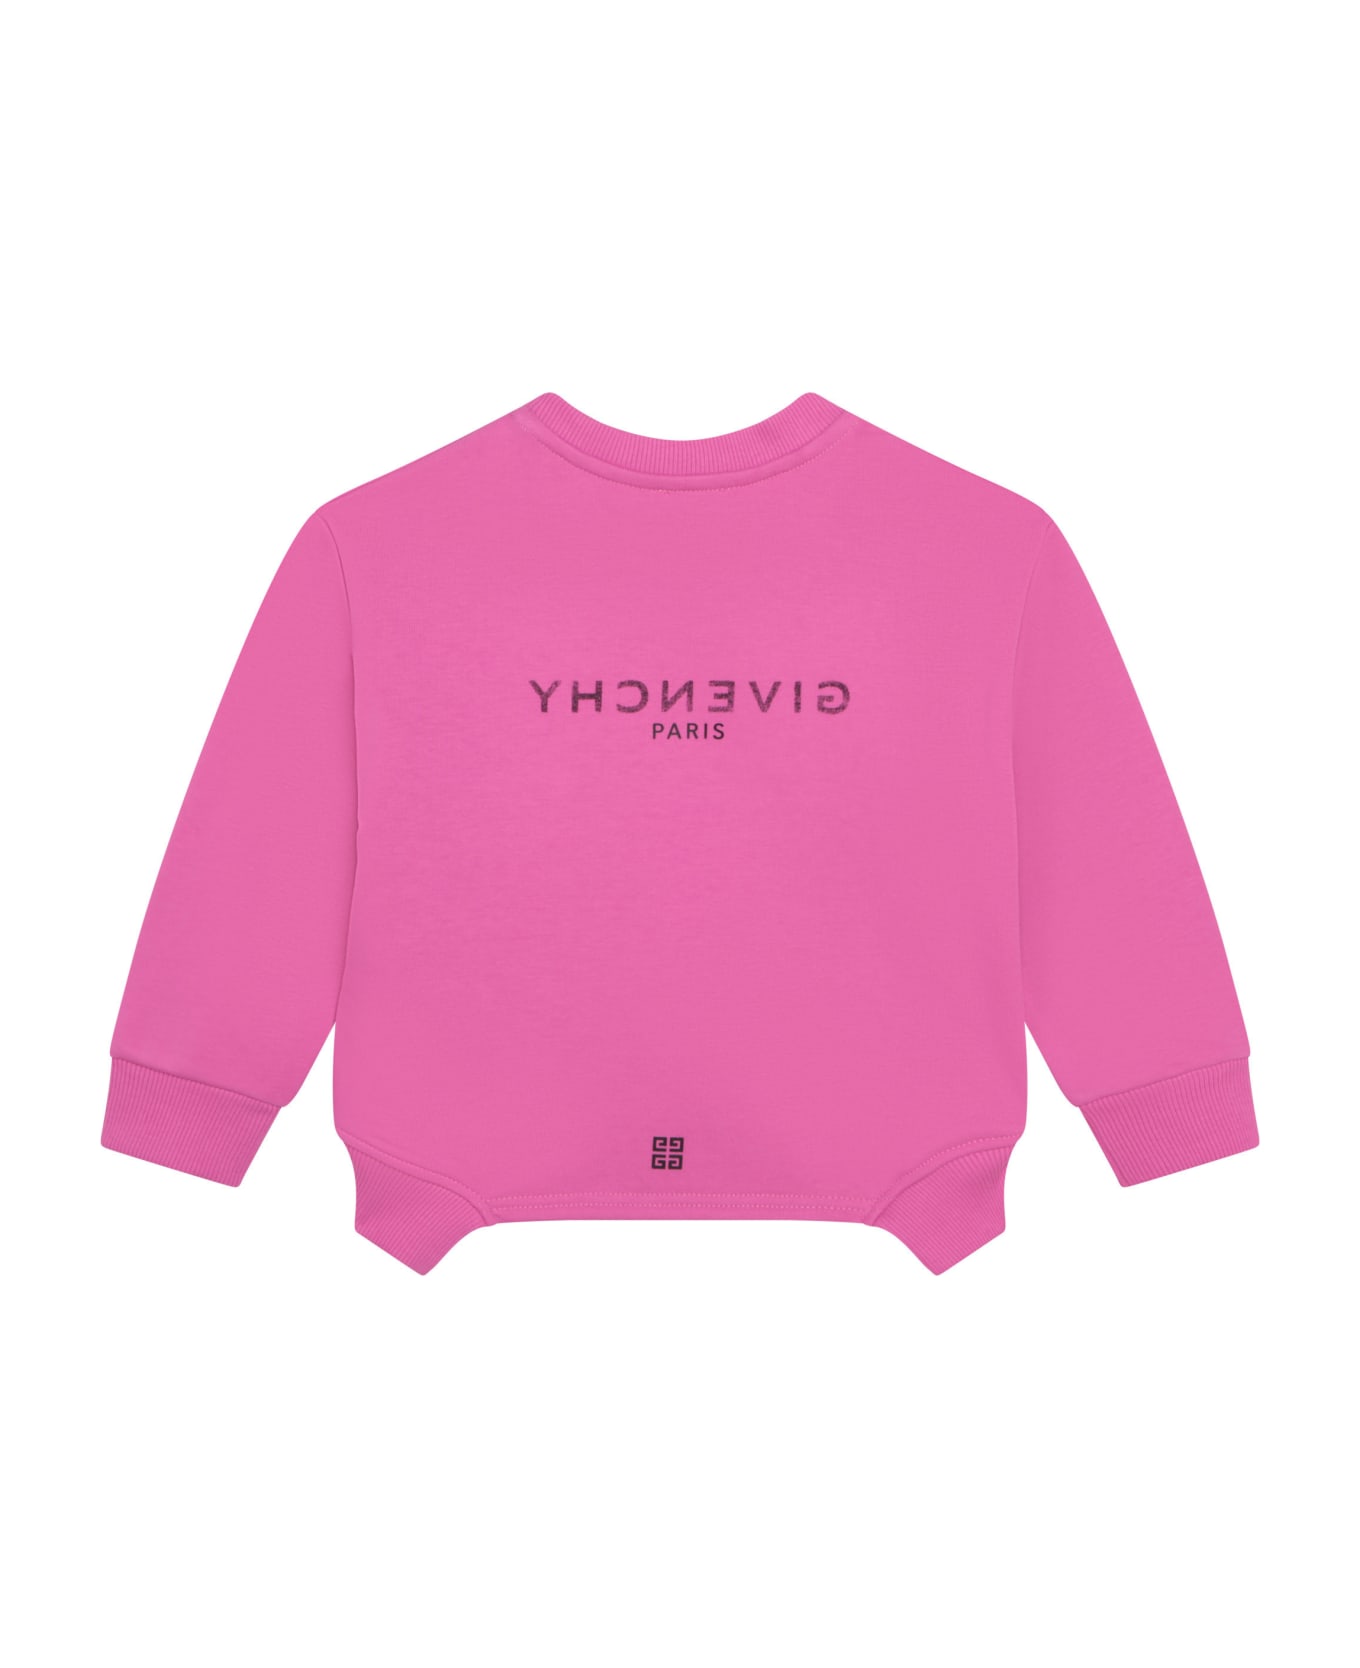 Givenchy Logo Sweatshirt - Lampone